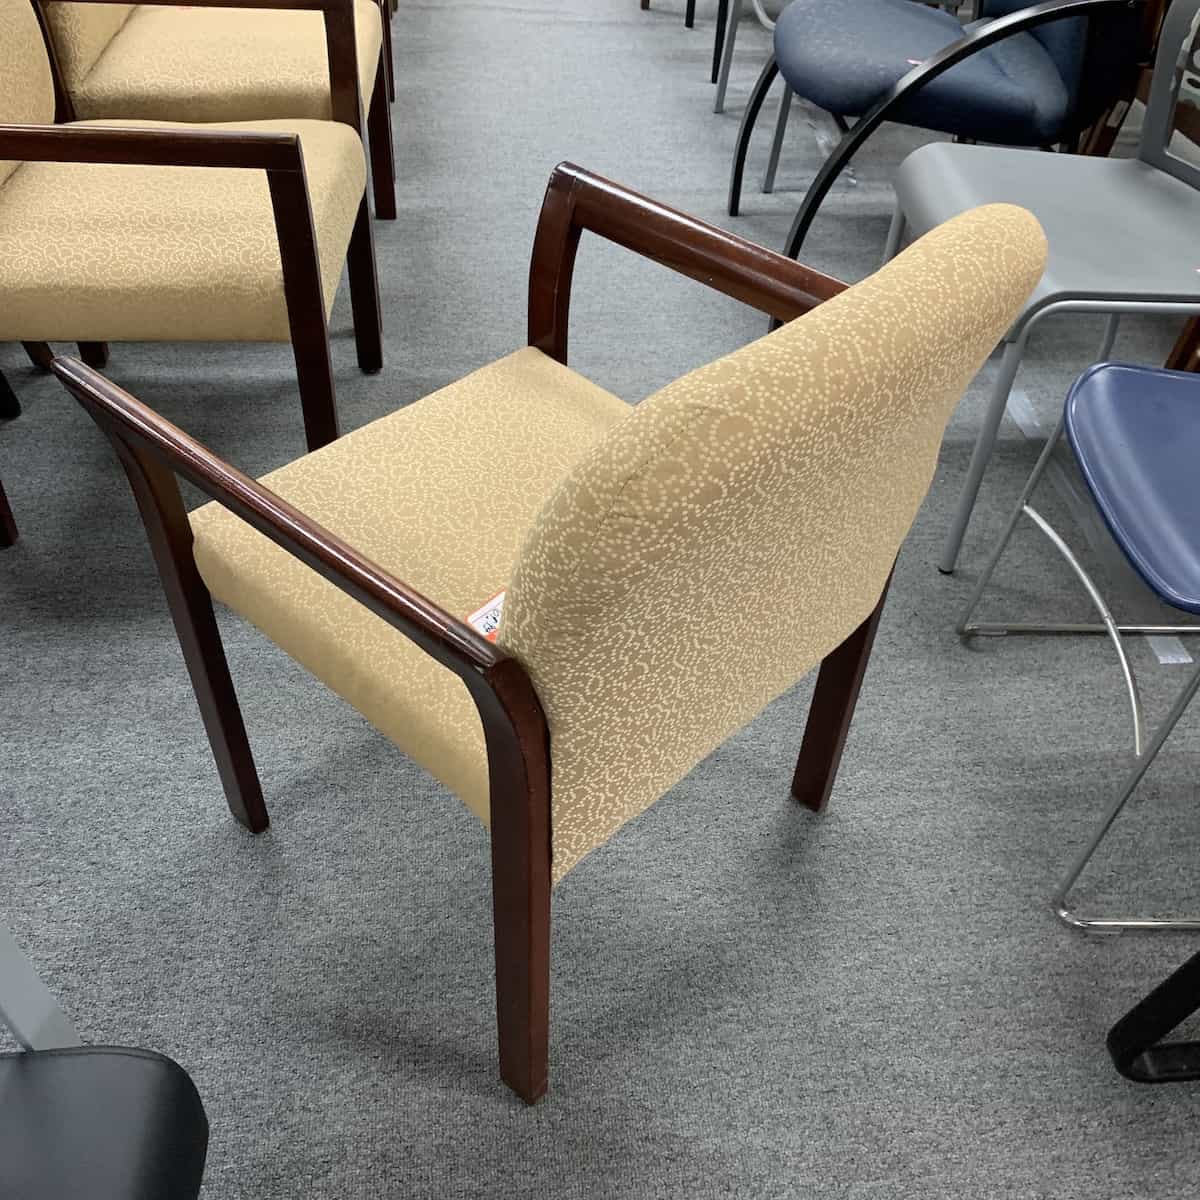 mahogany-tan-guest-chair-back